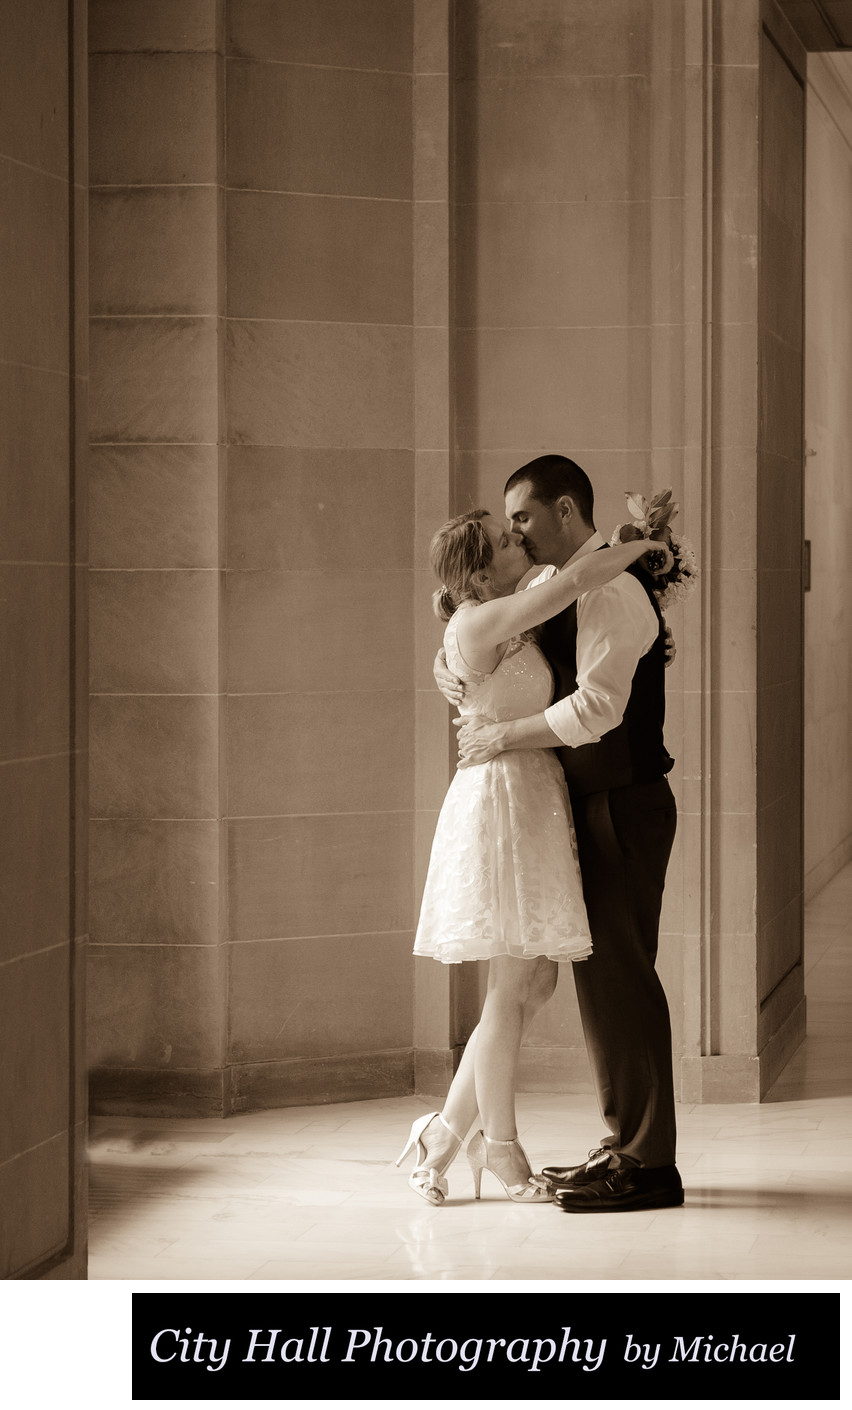 Best San Francisco wedding kiss in Sepia Tone Image